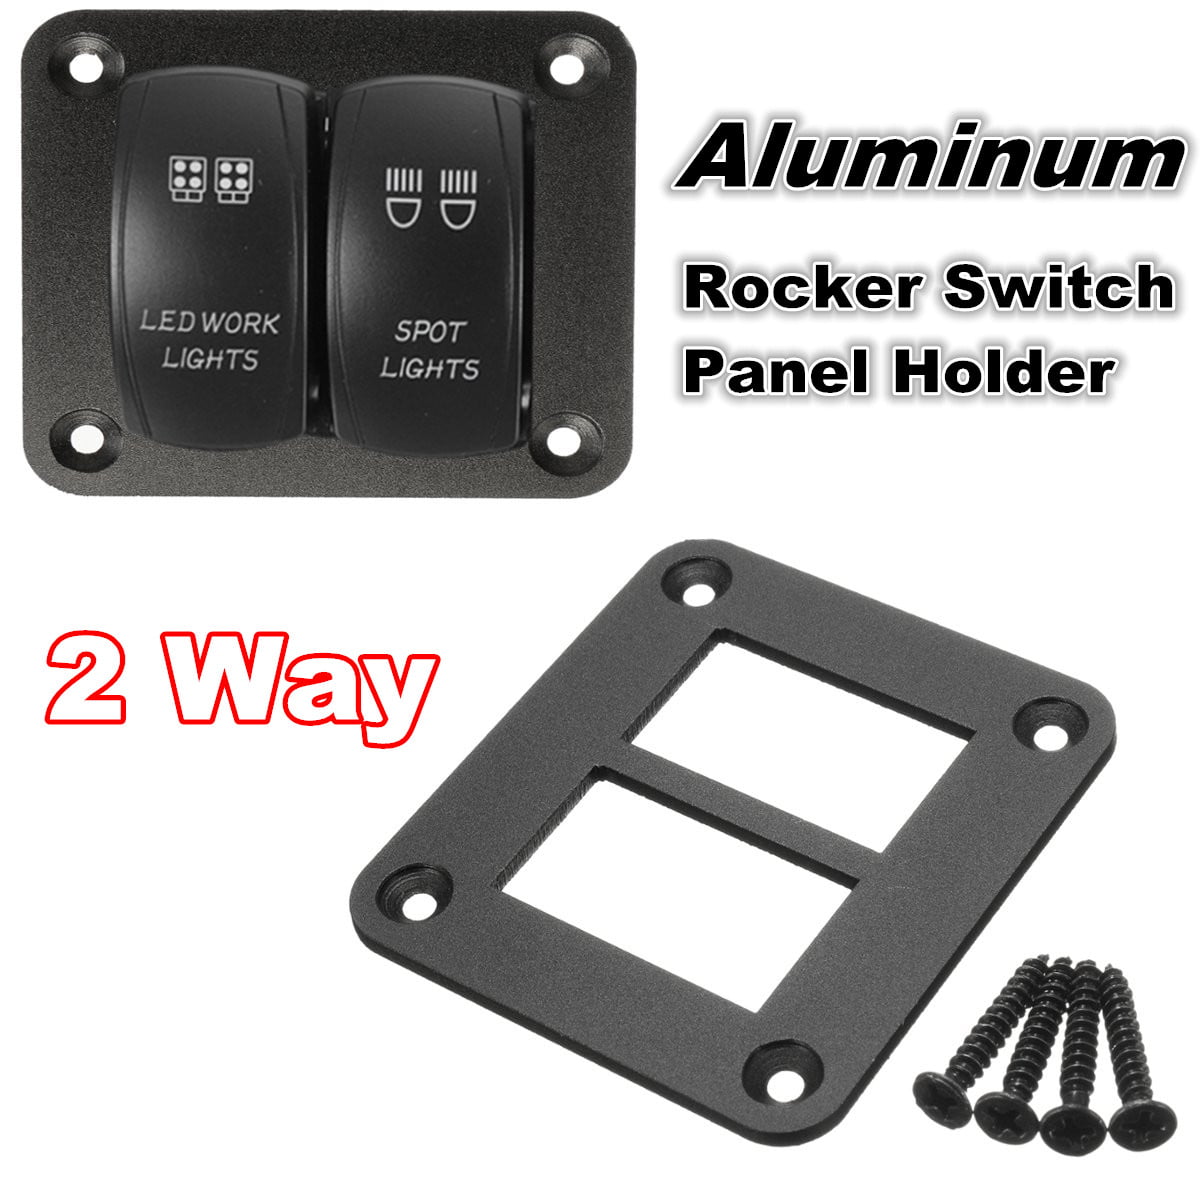 3 Way Aluminum Rocker Switch Panel Housing Holder FOR ARB Carling Narva Boat 